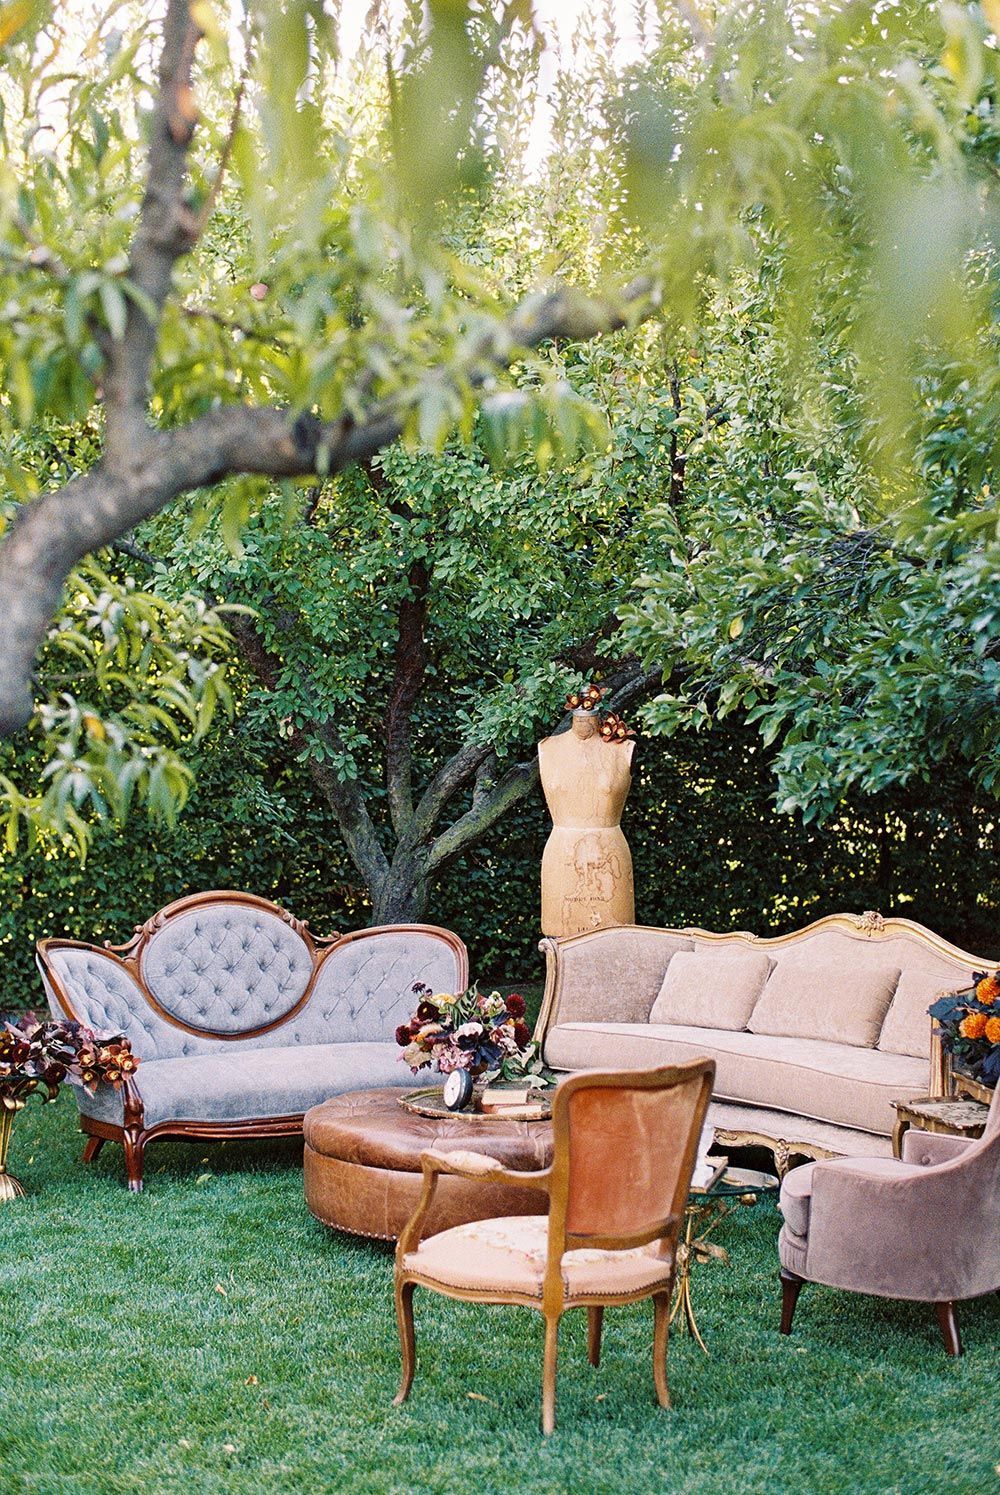 Luxurious Hidden Garden Romance with a Rich, Warm Color Palette -   17 vintage garden seating ideas